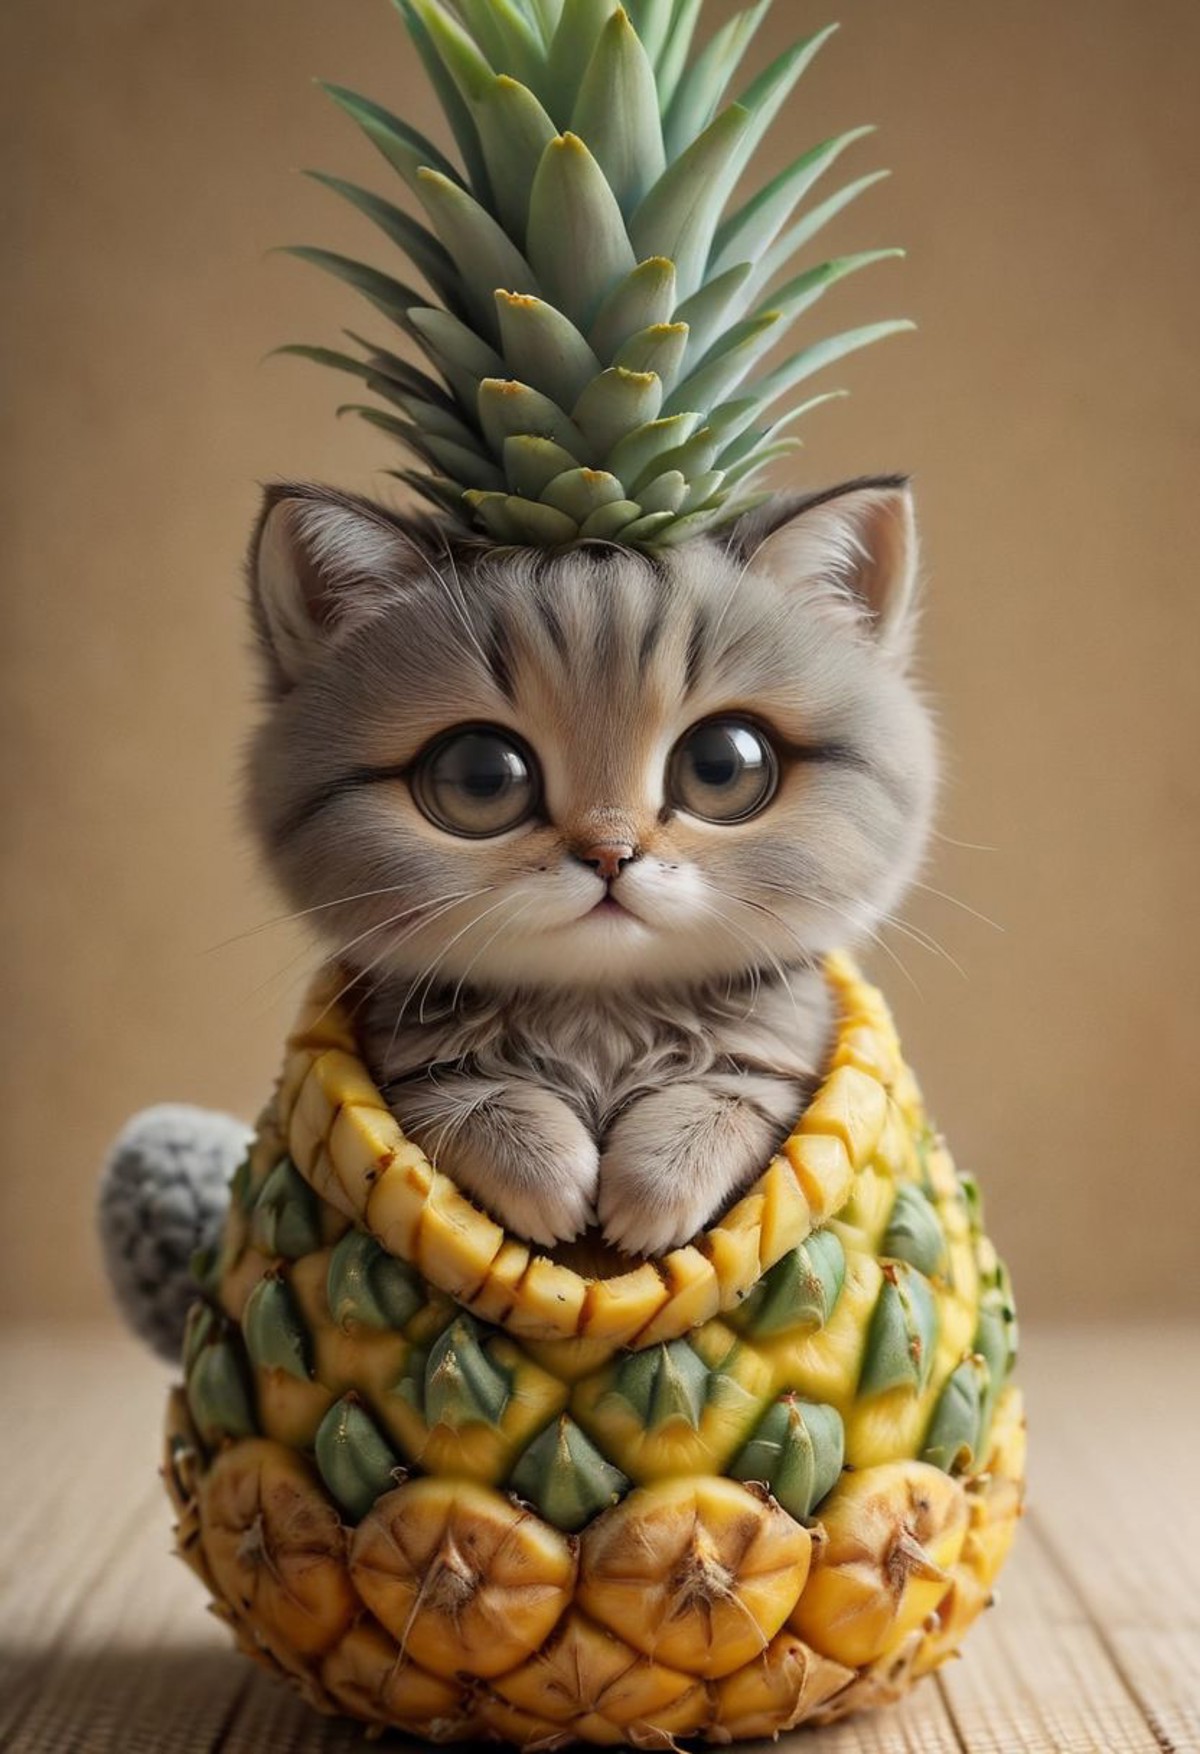 An award winning photo , a cute little baby cat,doing Yoga on a yoga matt in a pineapple costume,, (((cuteness overload)))...